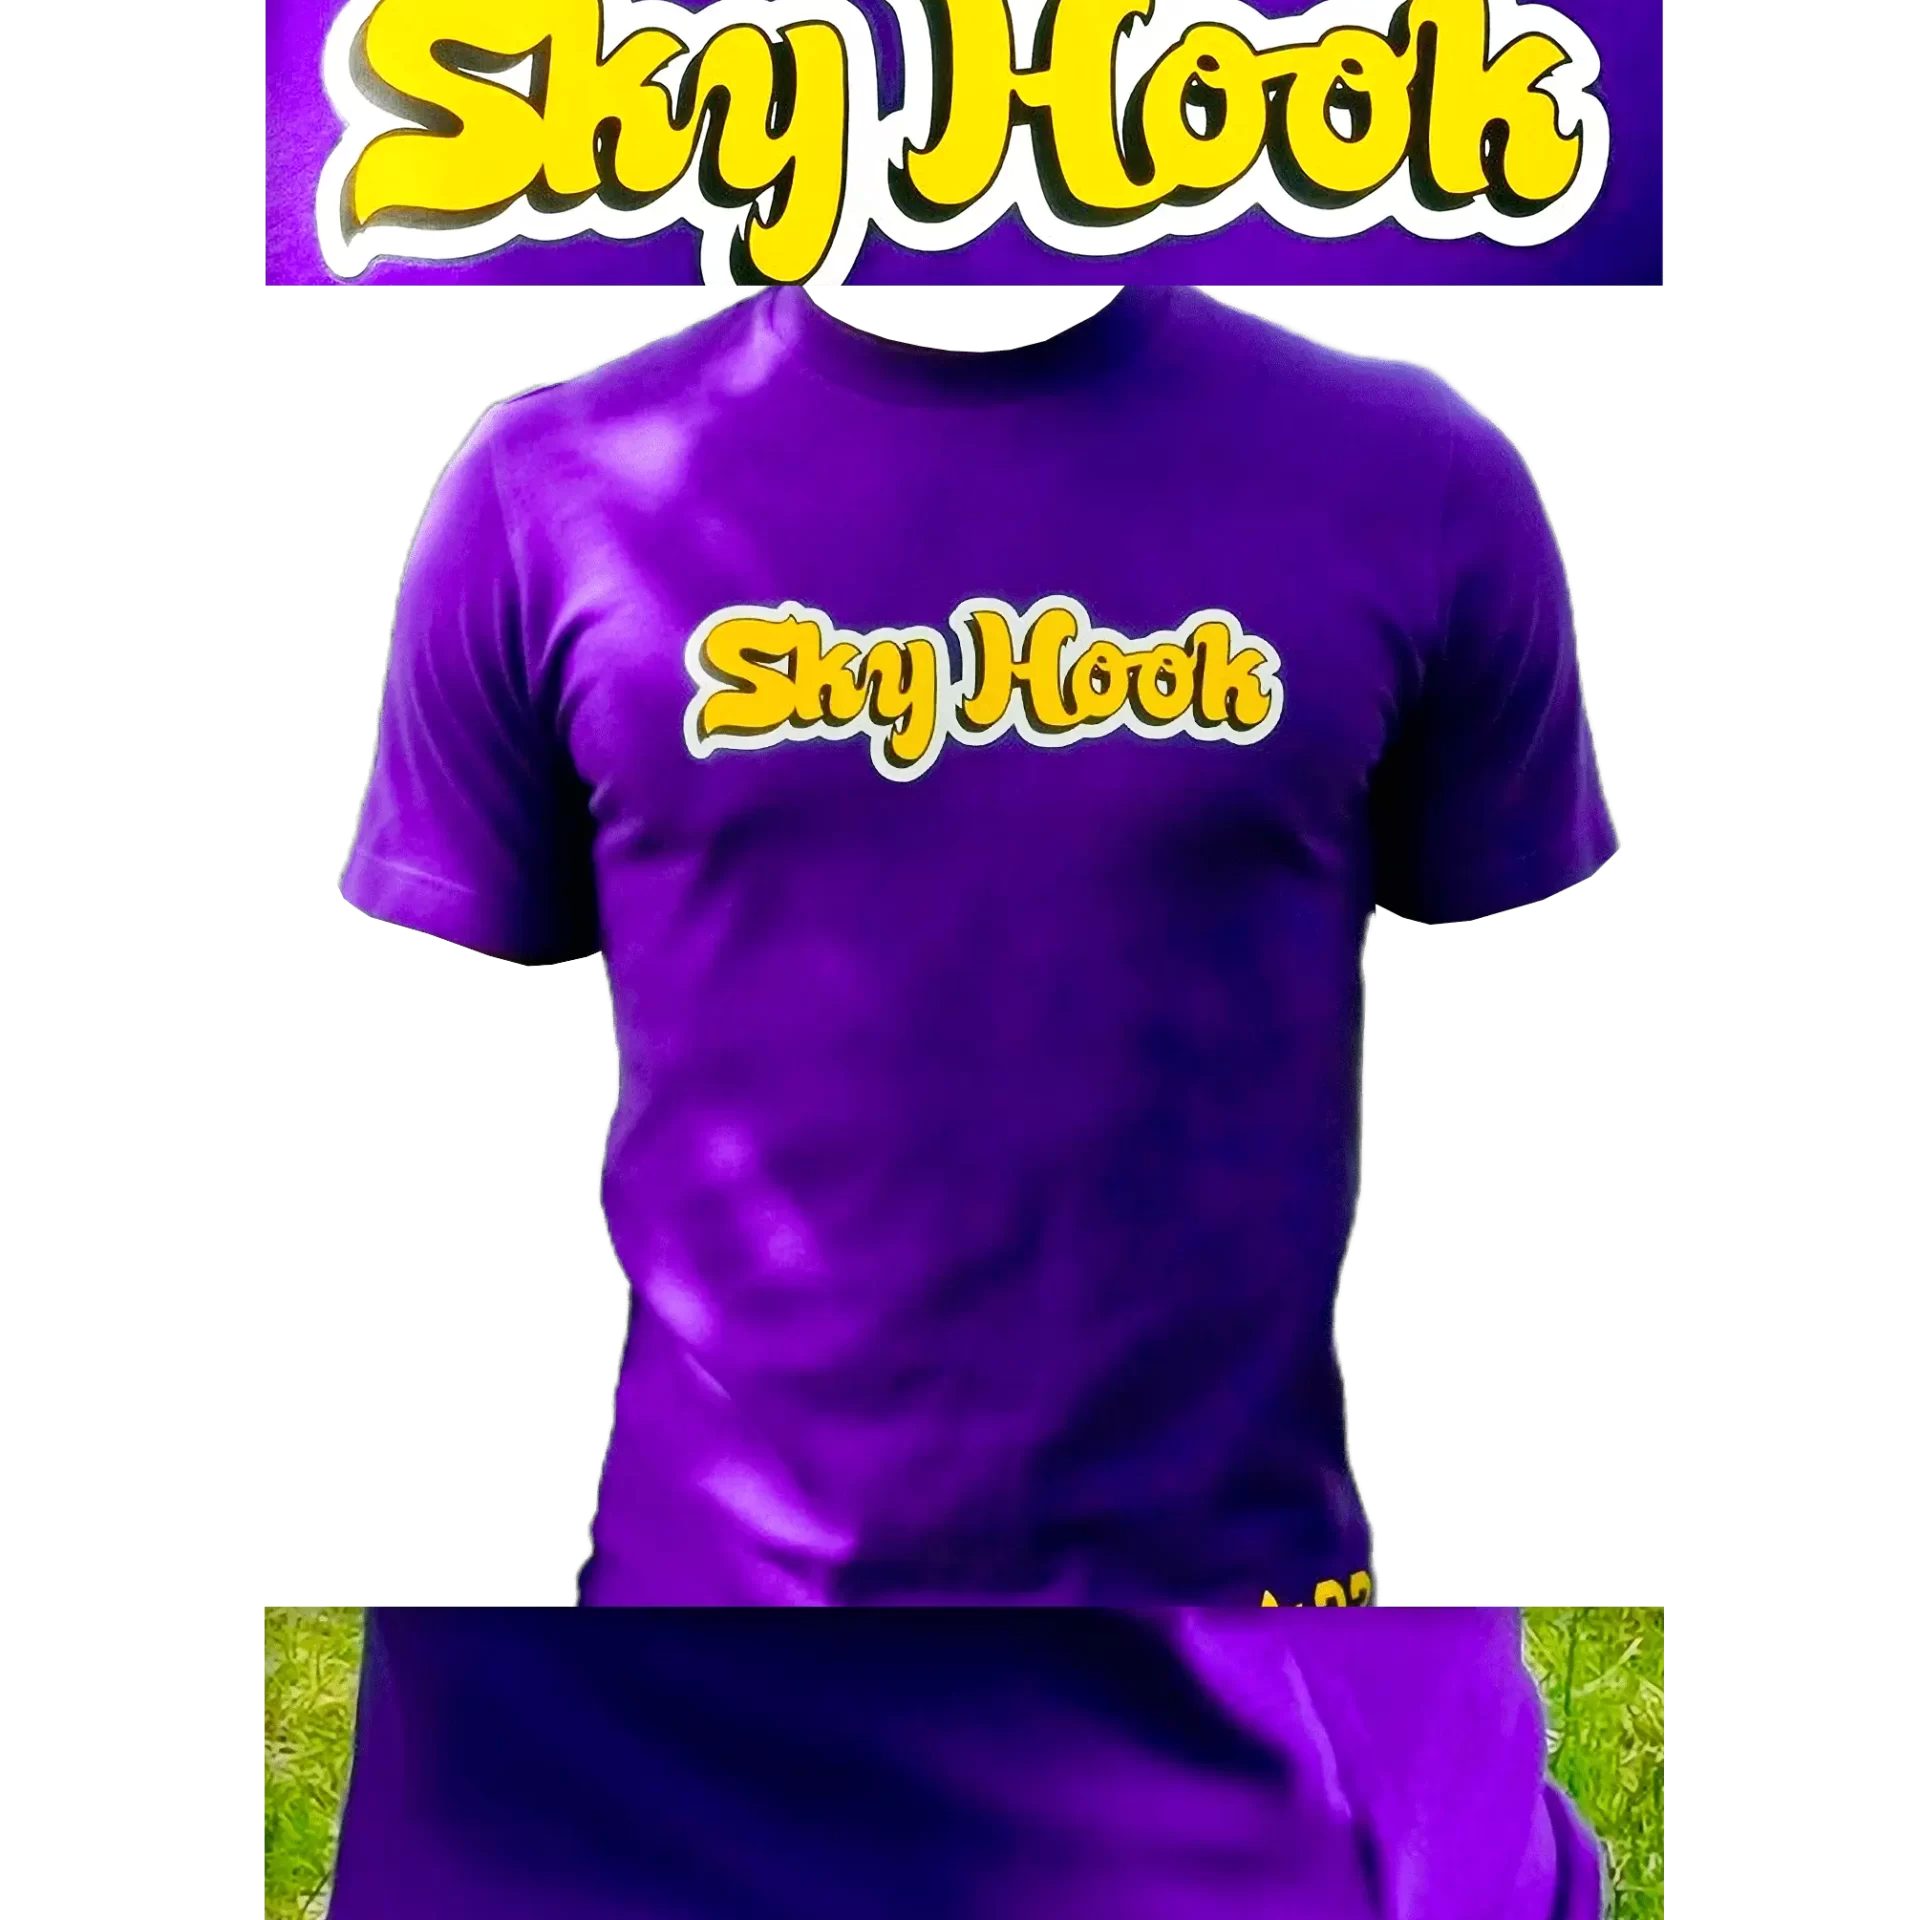 Men's 2004 SkyHook Lakers #33 T-Shirt by Adidas: Unburdened (EnLawded.com file #lmchk76165ip2y124826kg9st)